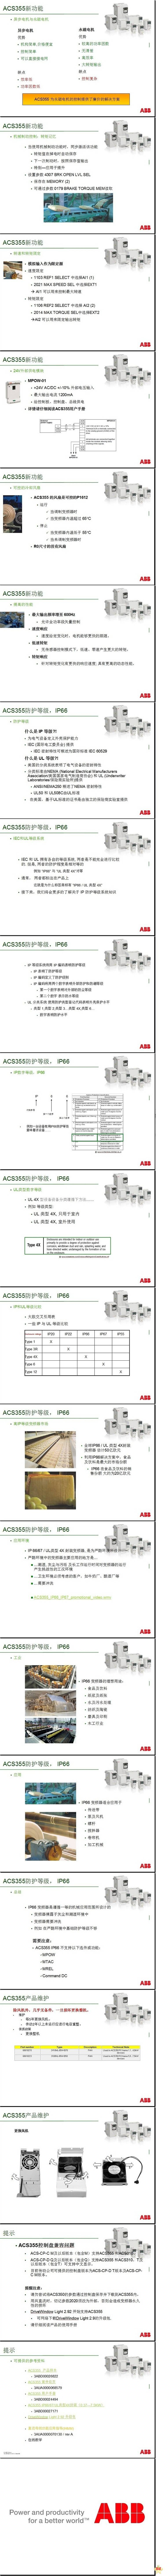 ABB 变频器 机械传动 三相 220V ACS355-03E-31A0-2 变频器,机械传动,微型传动,ACS355,ABB